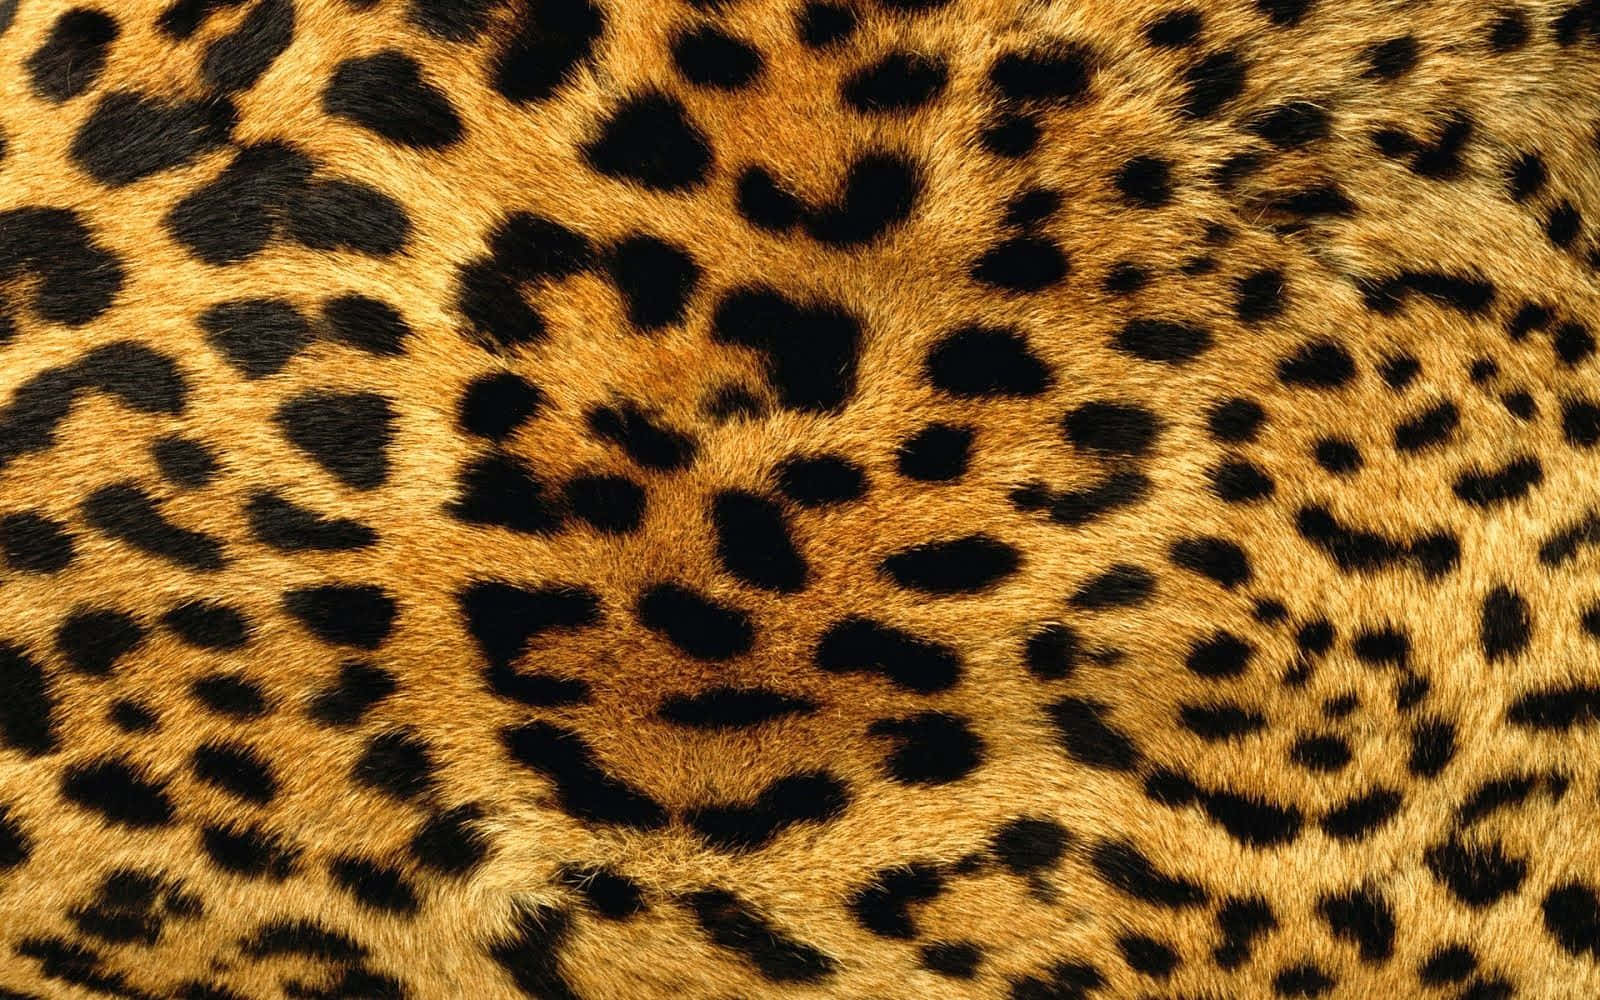 Louis Vuitton on X: Mixing prints. Zebra, cheetah, and leopard